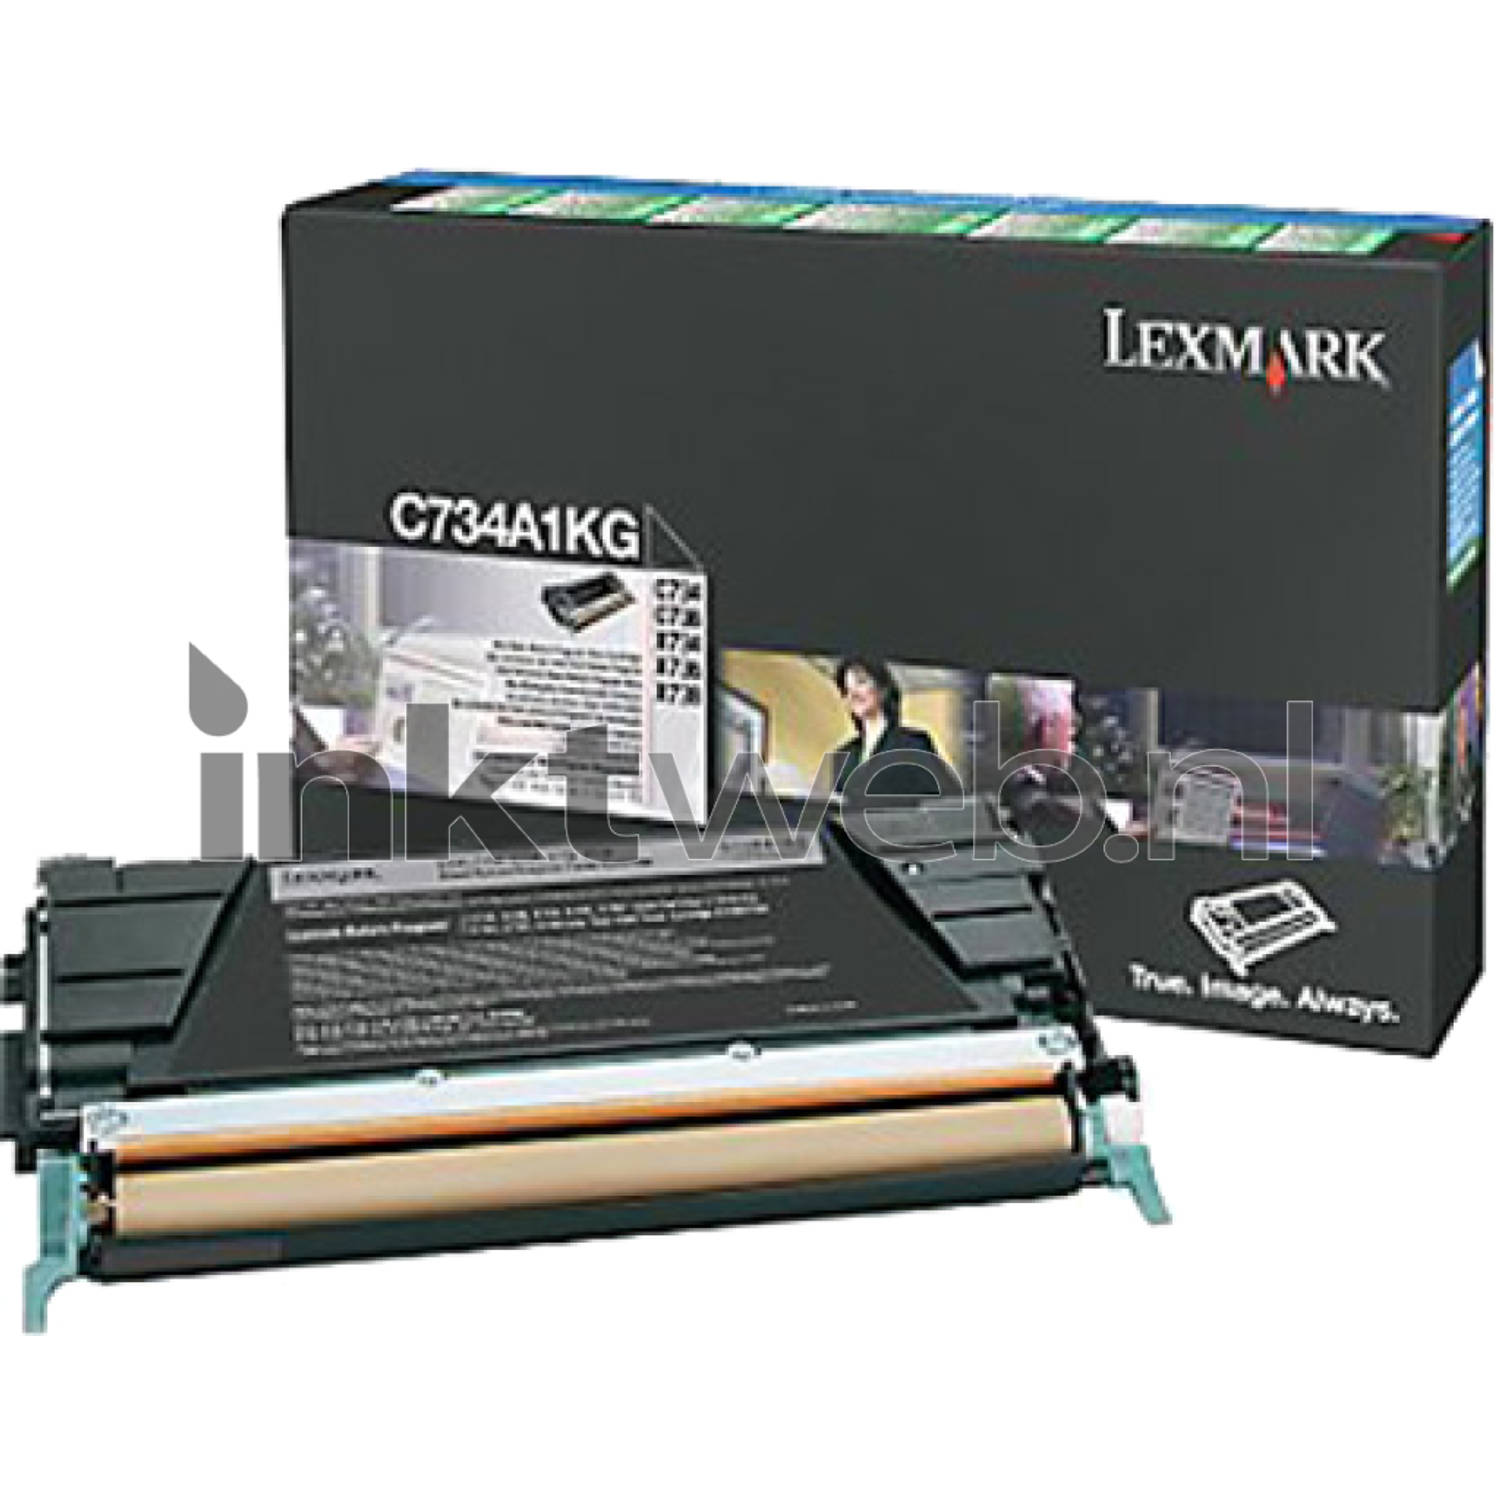 LEXMARK Toner voor printer CONSUMABLES Inktpatroon voor printer Toner voor printer Toner voor printe